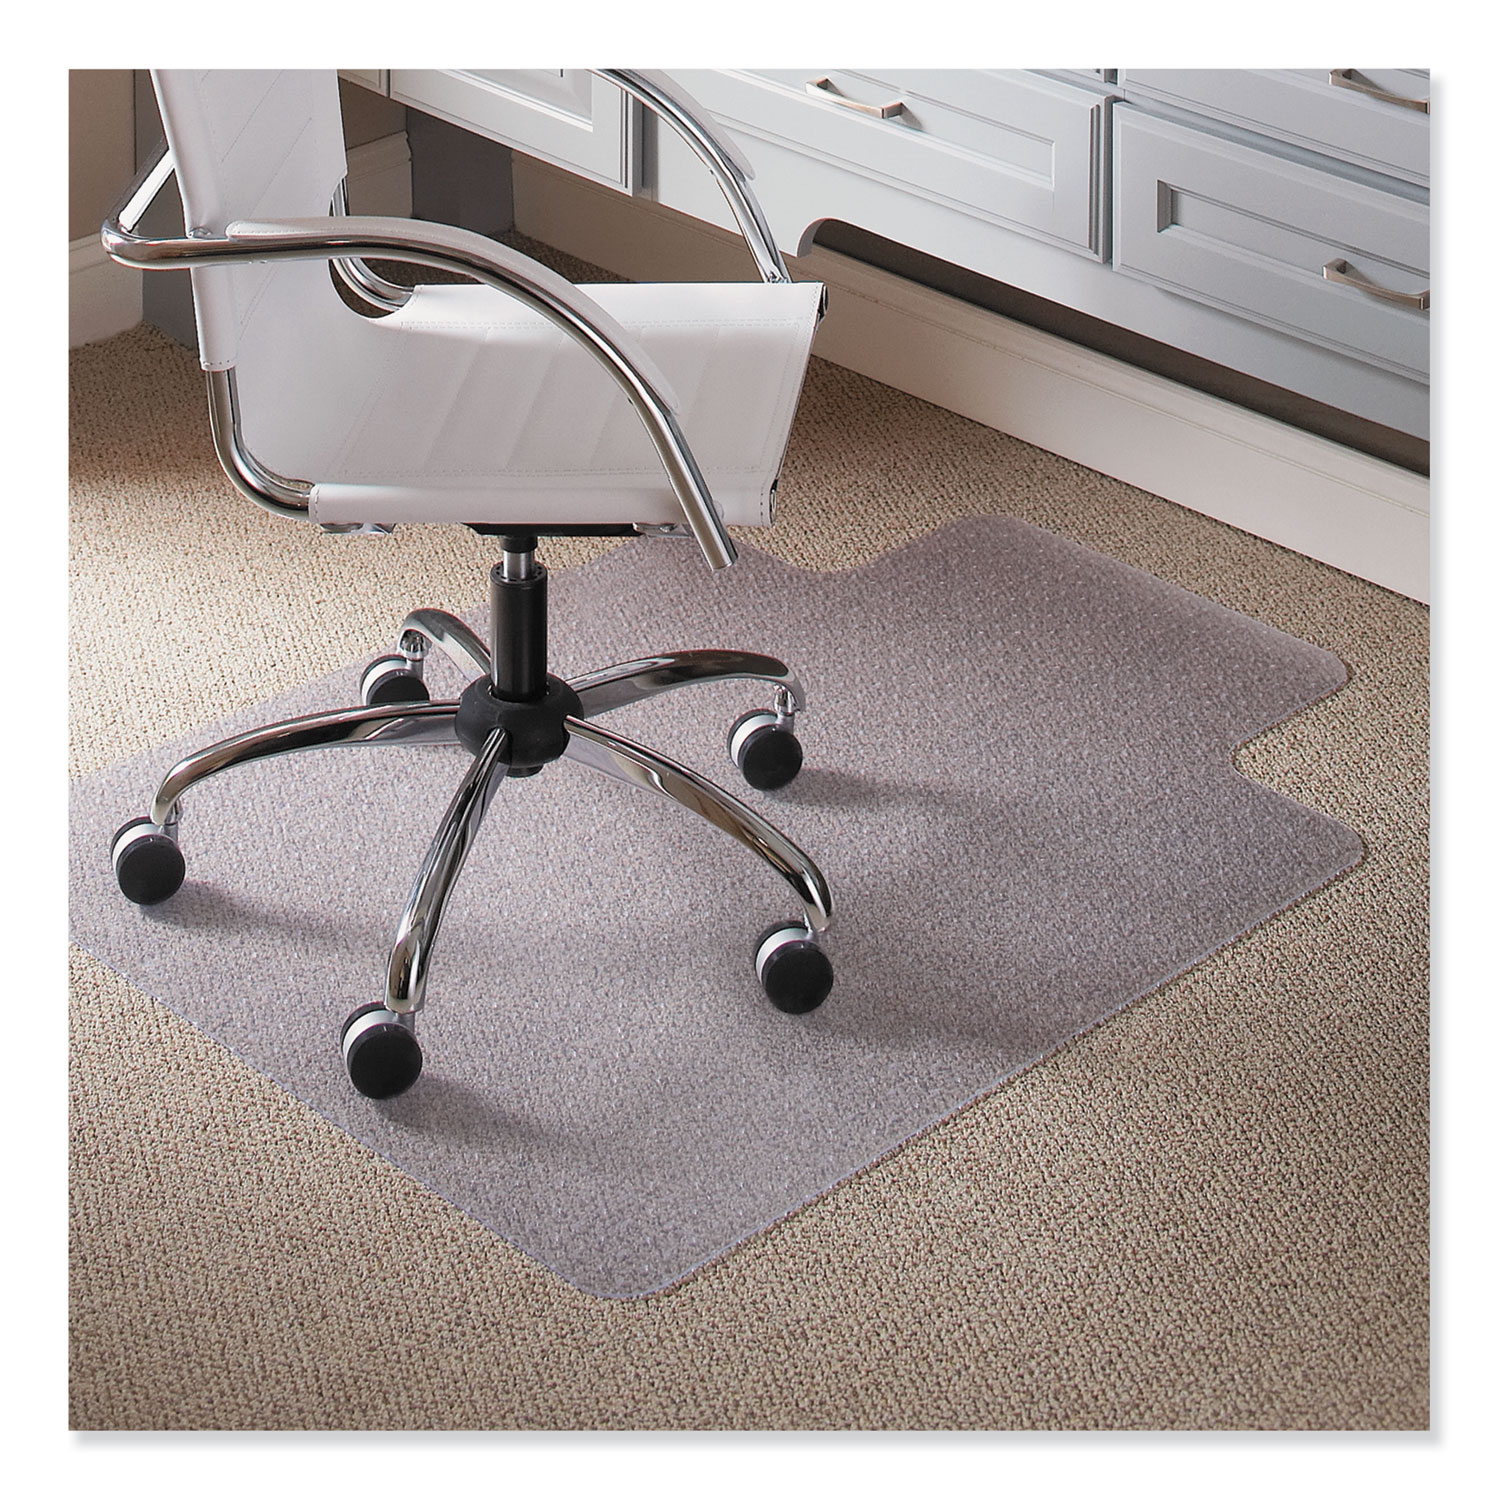  ES Robbins 120023 Task Series Chair Mat with AnchorBar for Carpet up to 0.25, 36 x 48, Clear (ESR120023) 